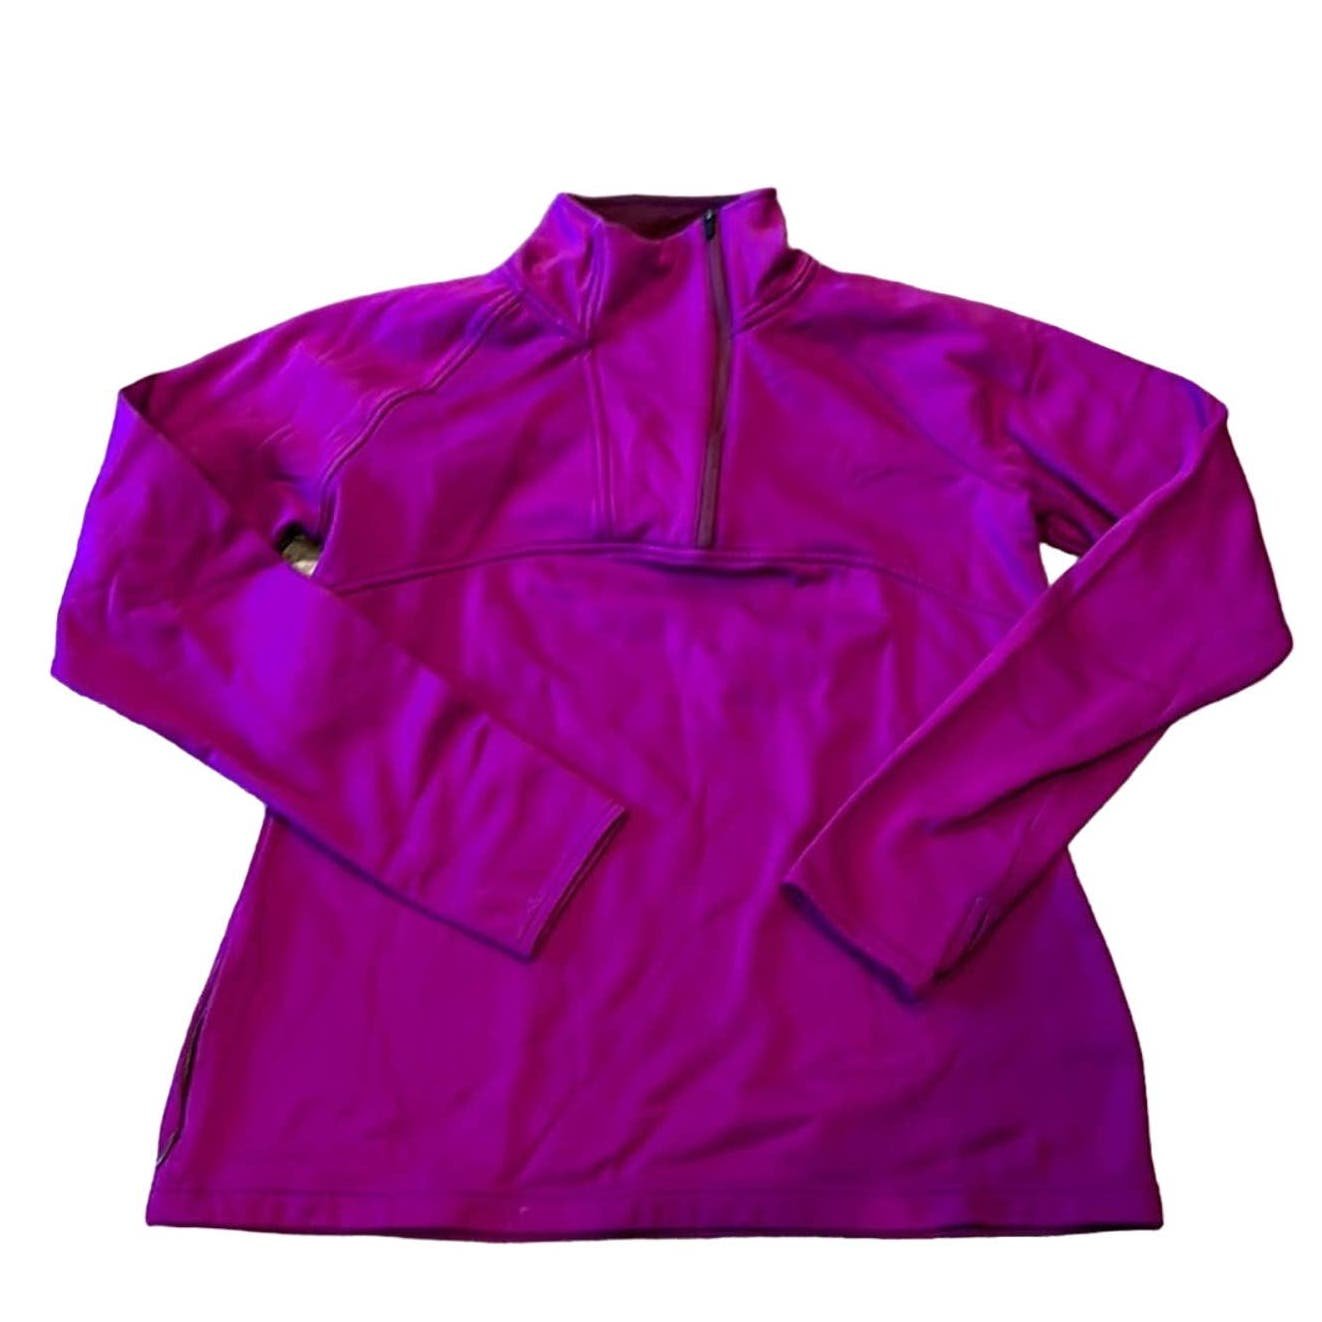 Elegant Title Nine Asymmetrical Quarter Zip Purple Fleece Size M gjJ47VU1s online store